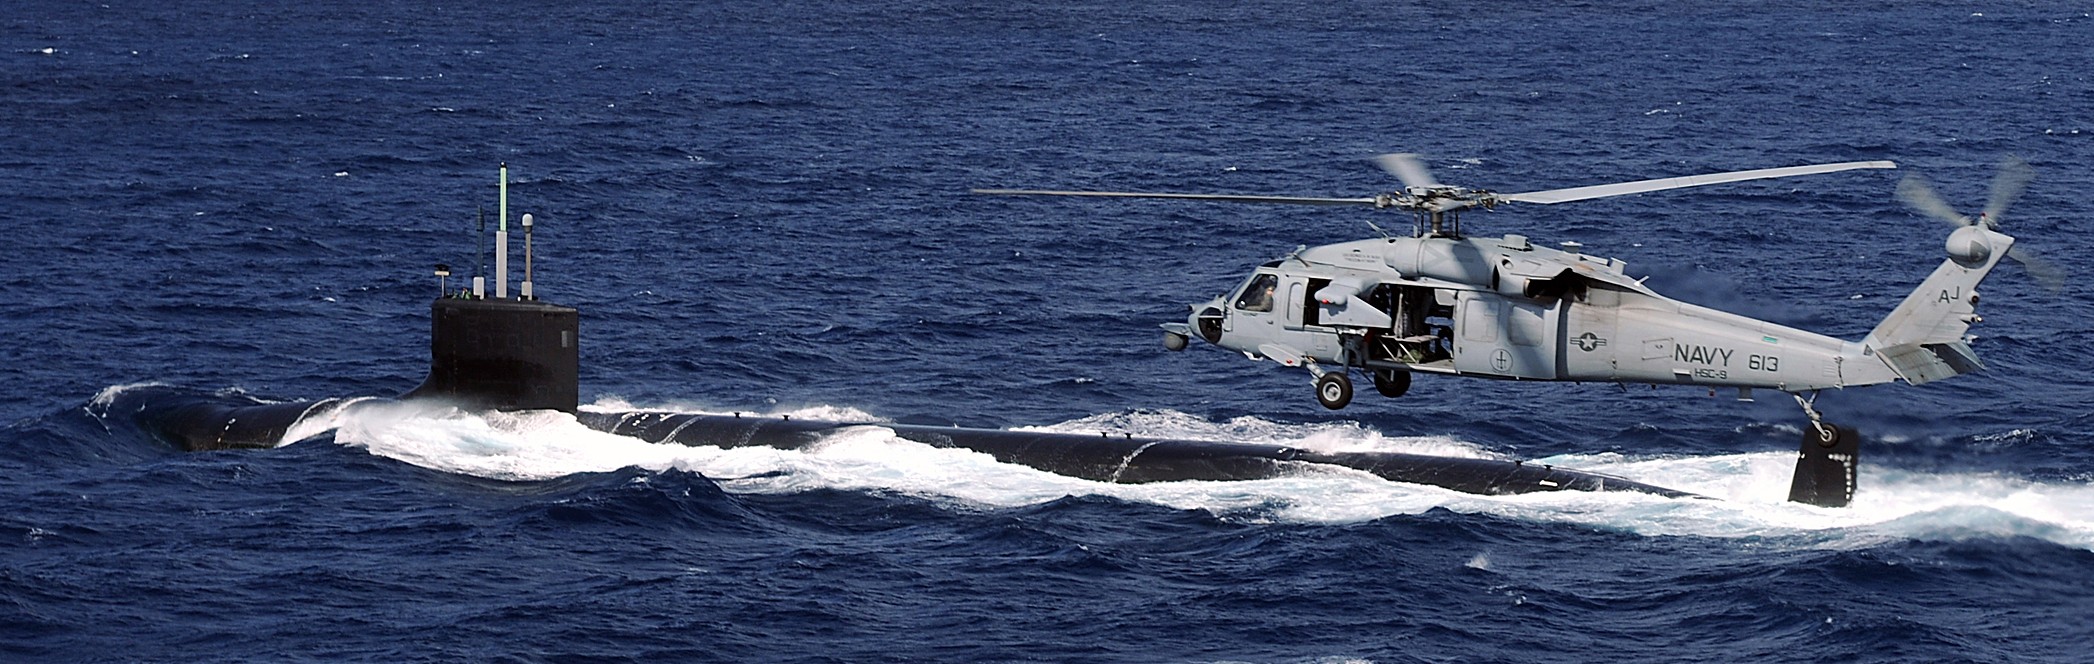 ssn-779 uss new mexico virginia class attack submarine us navy 29